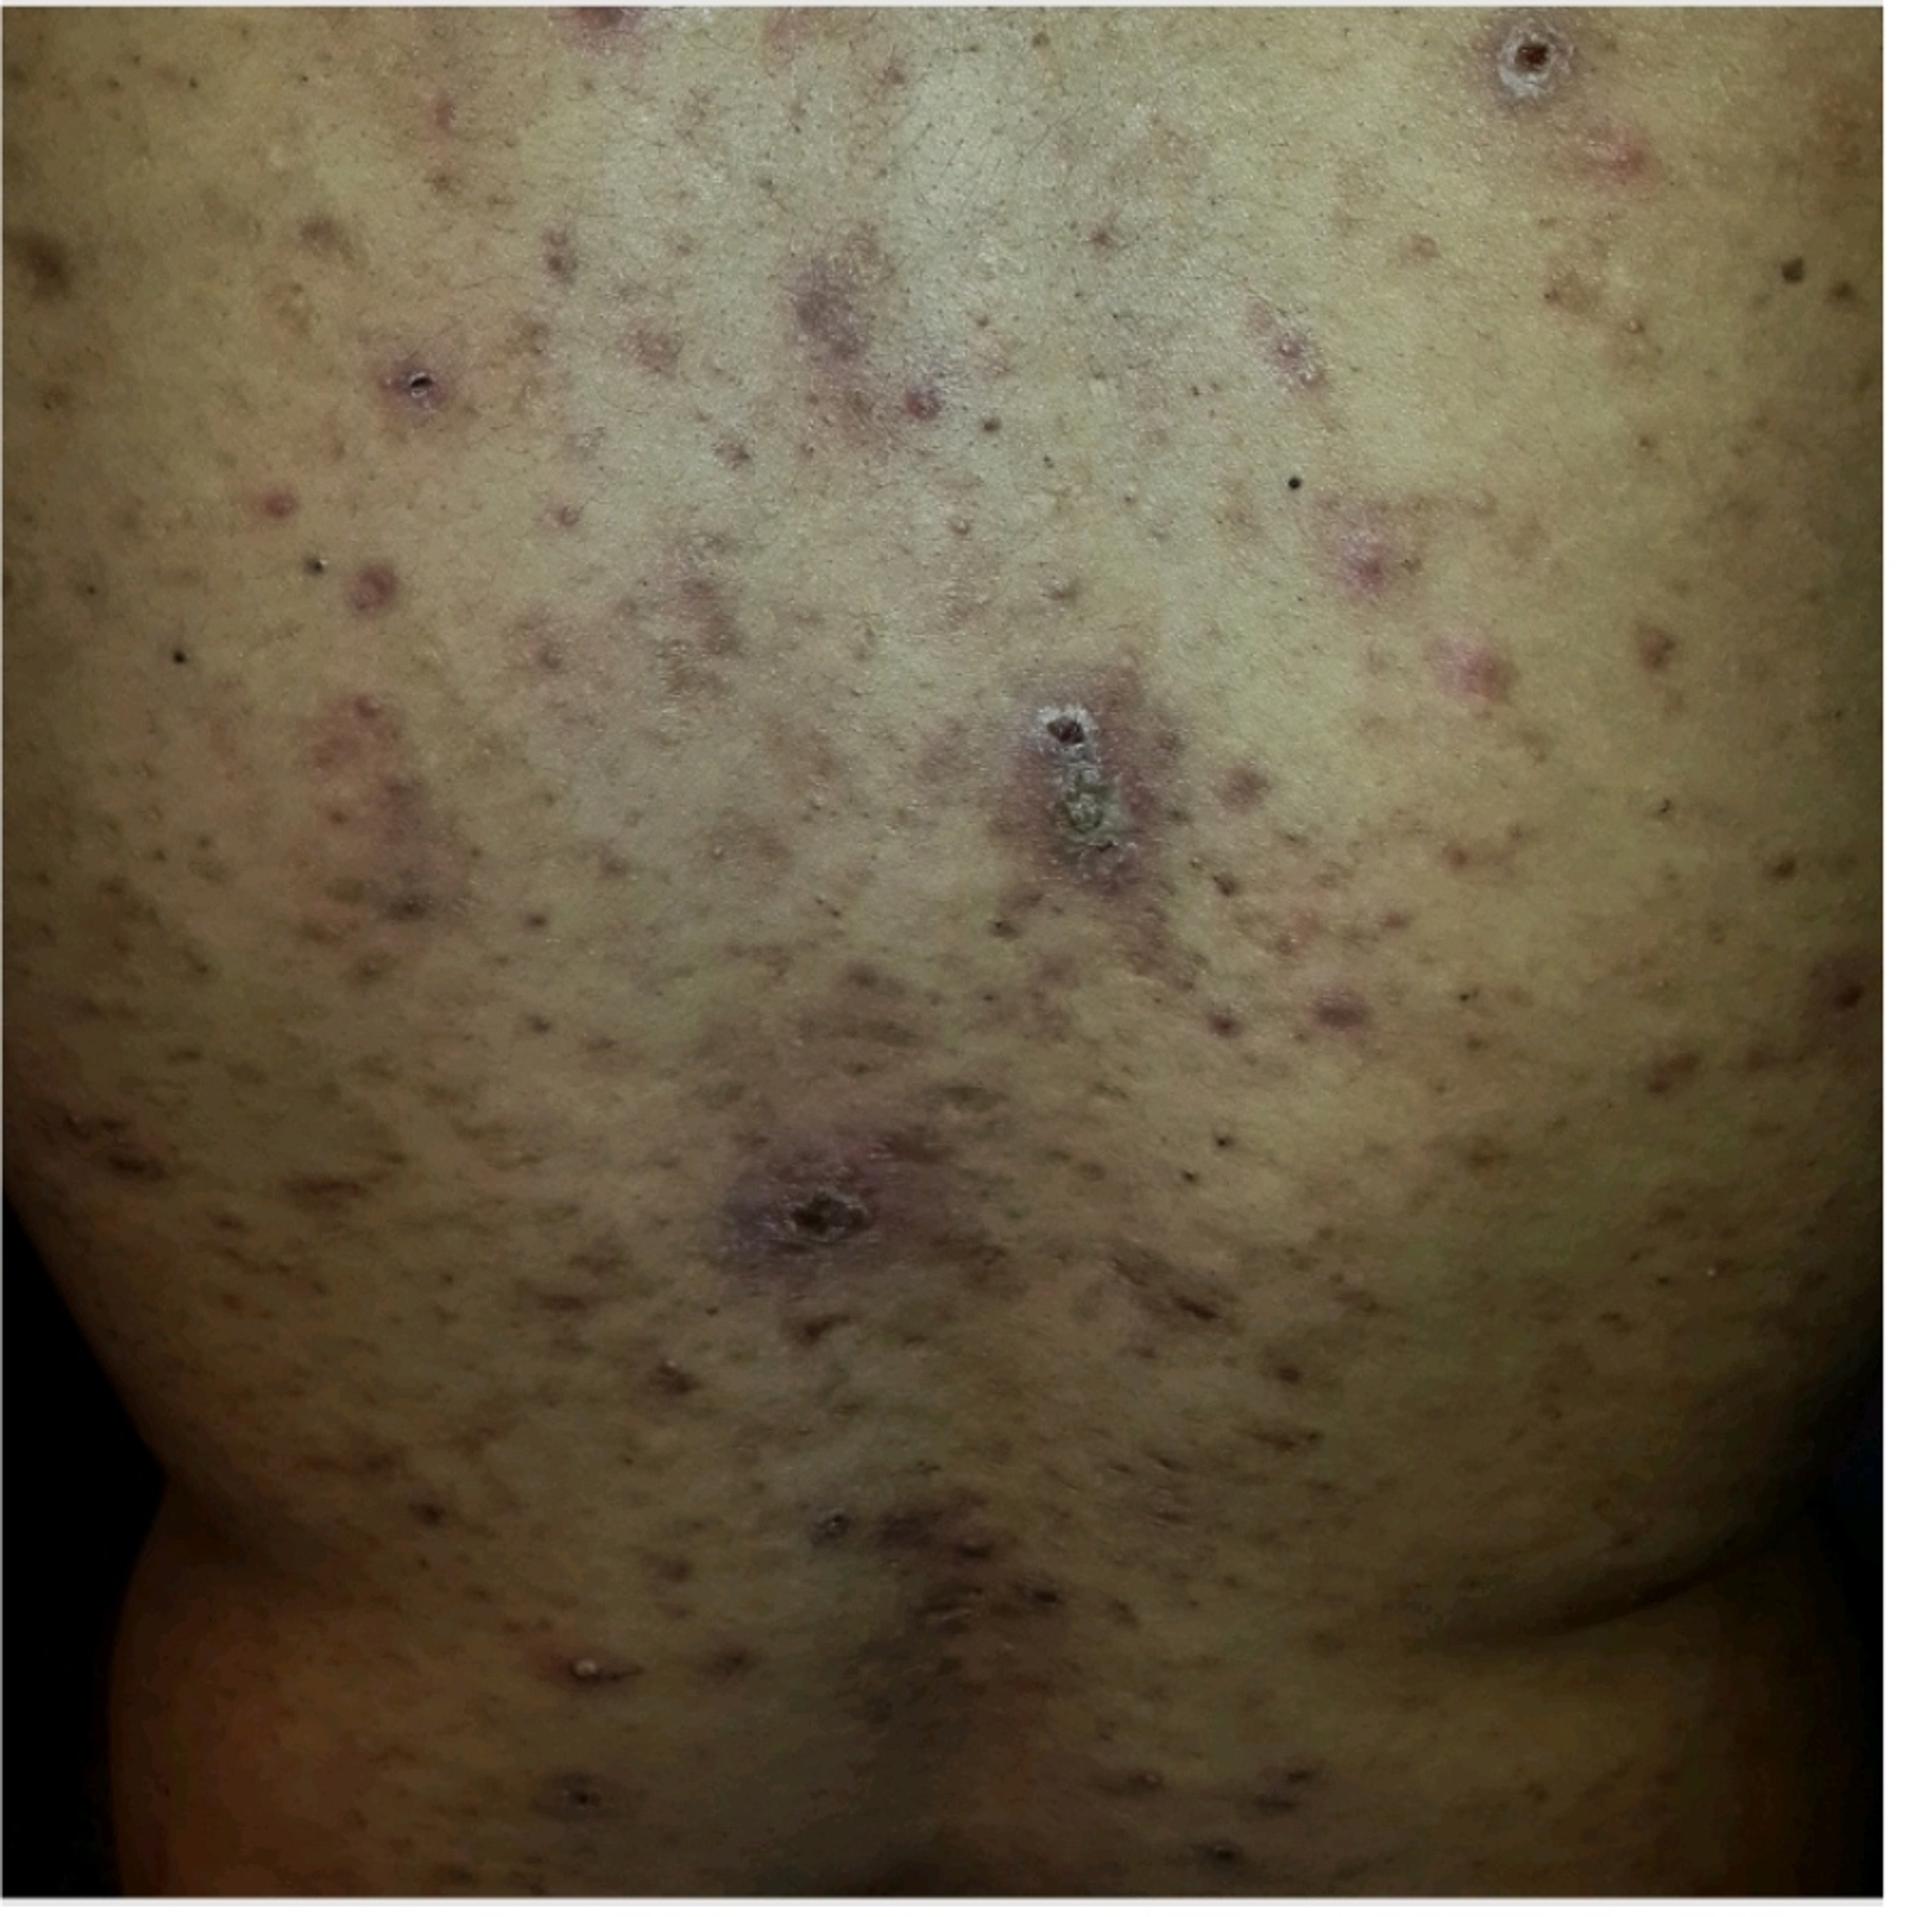 Cureus | Trichophyton rubrum Skin Folliculitis in Behçet's Disease | Article